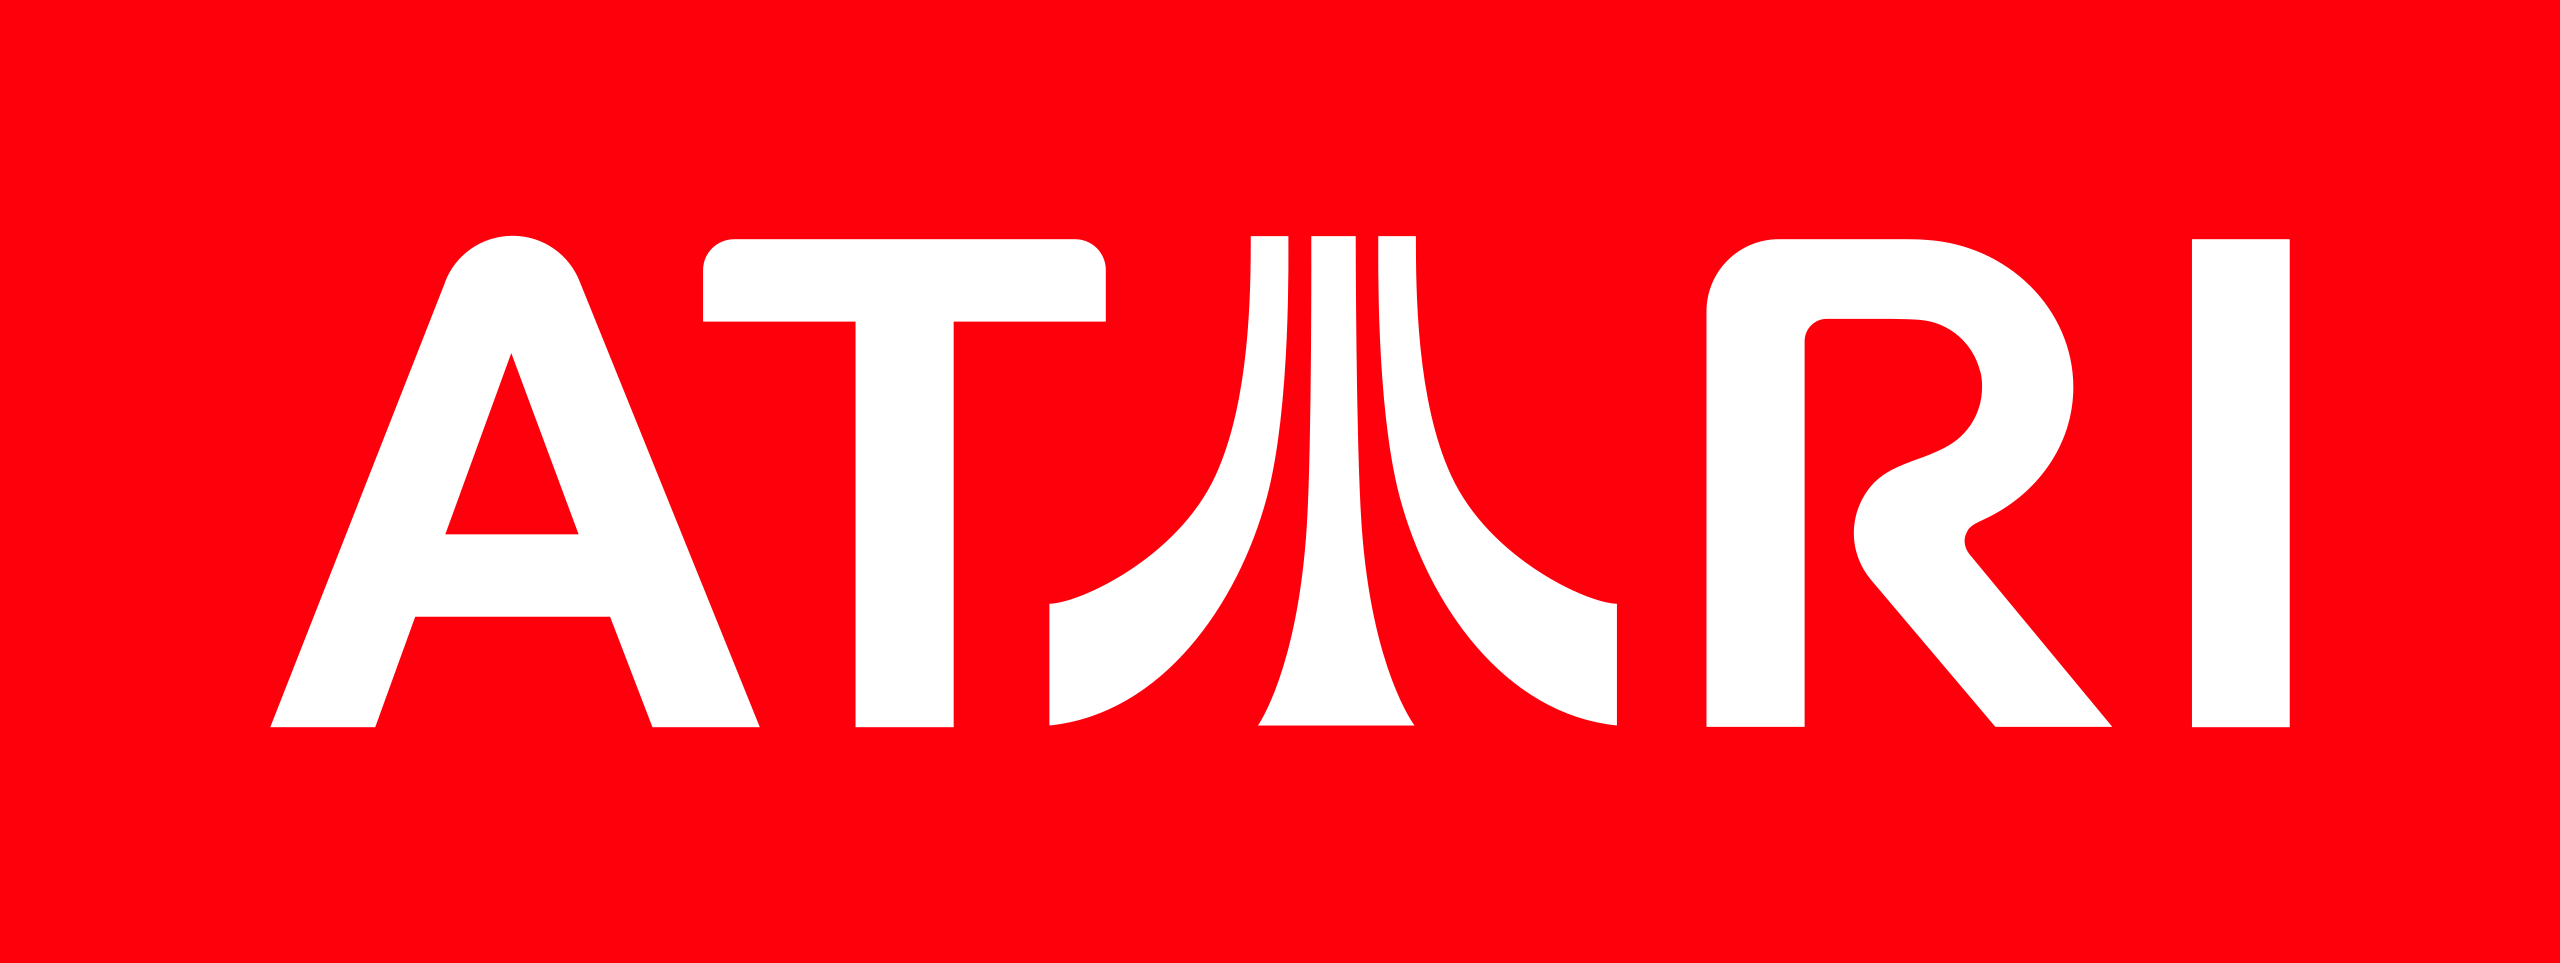 Atari Logo Image